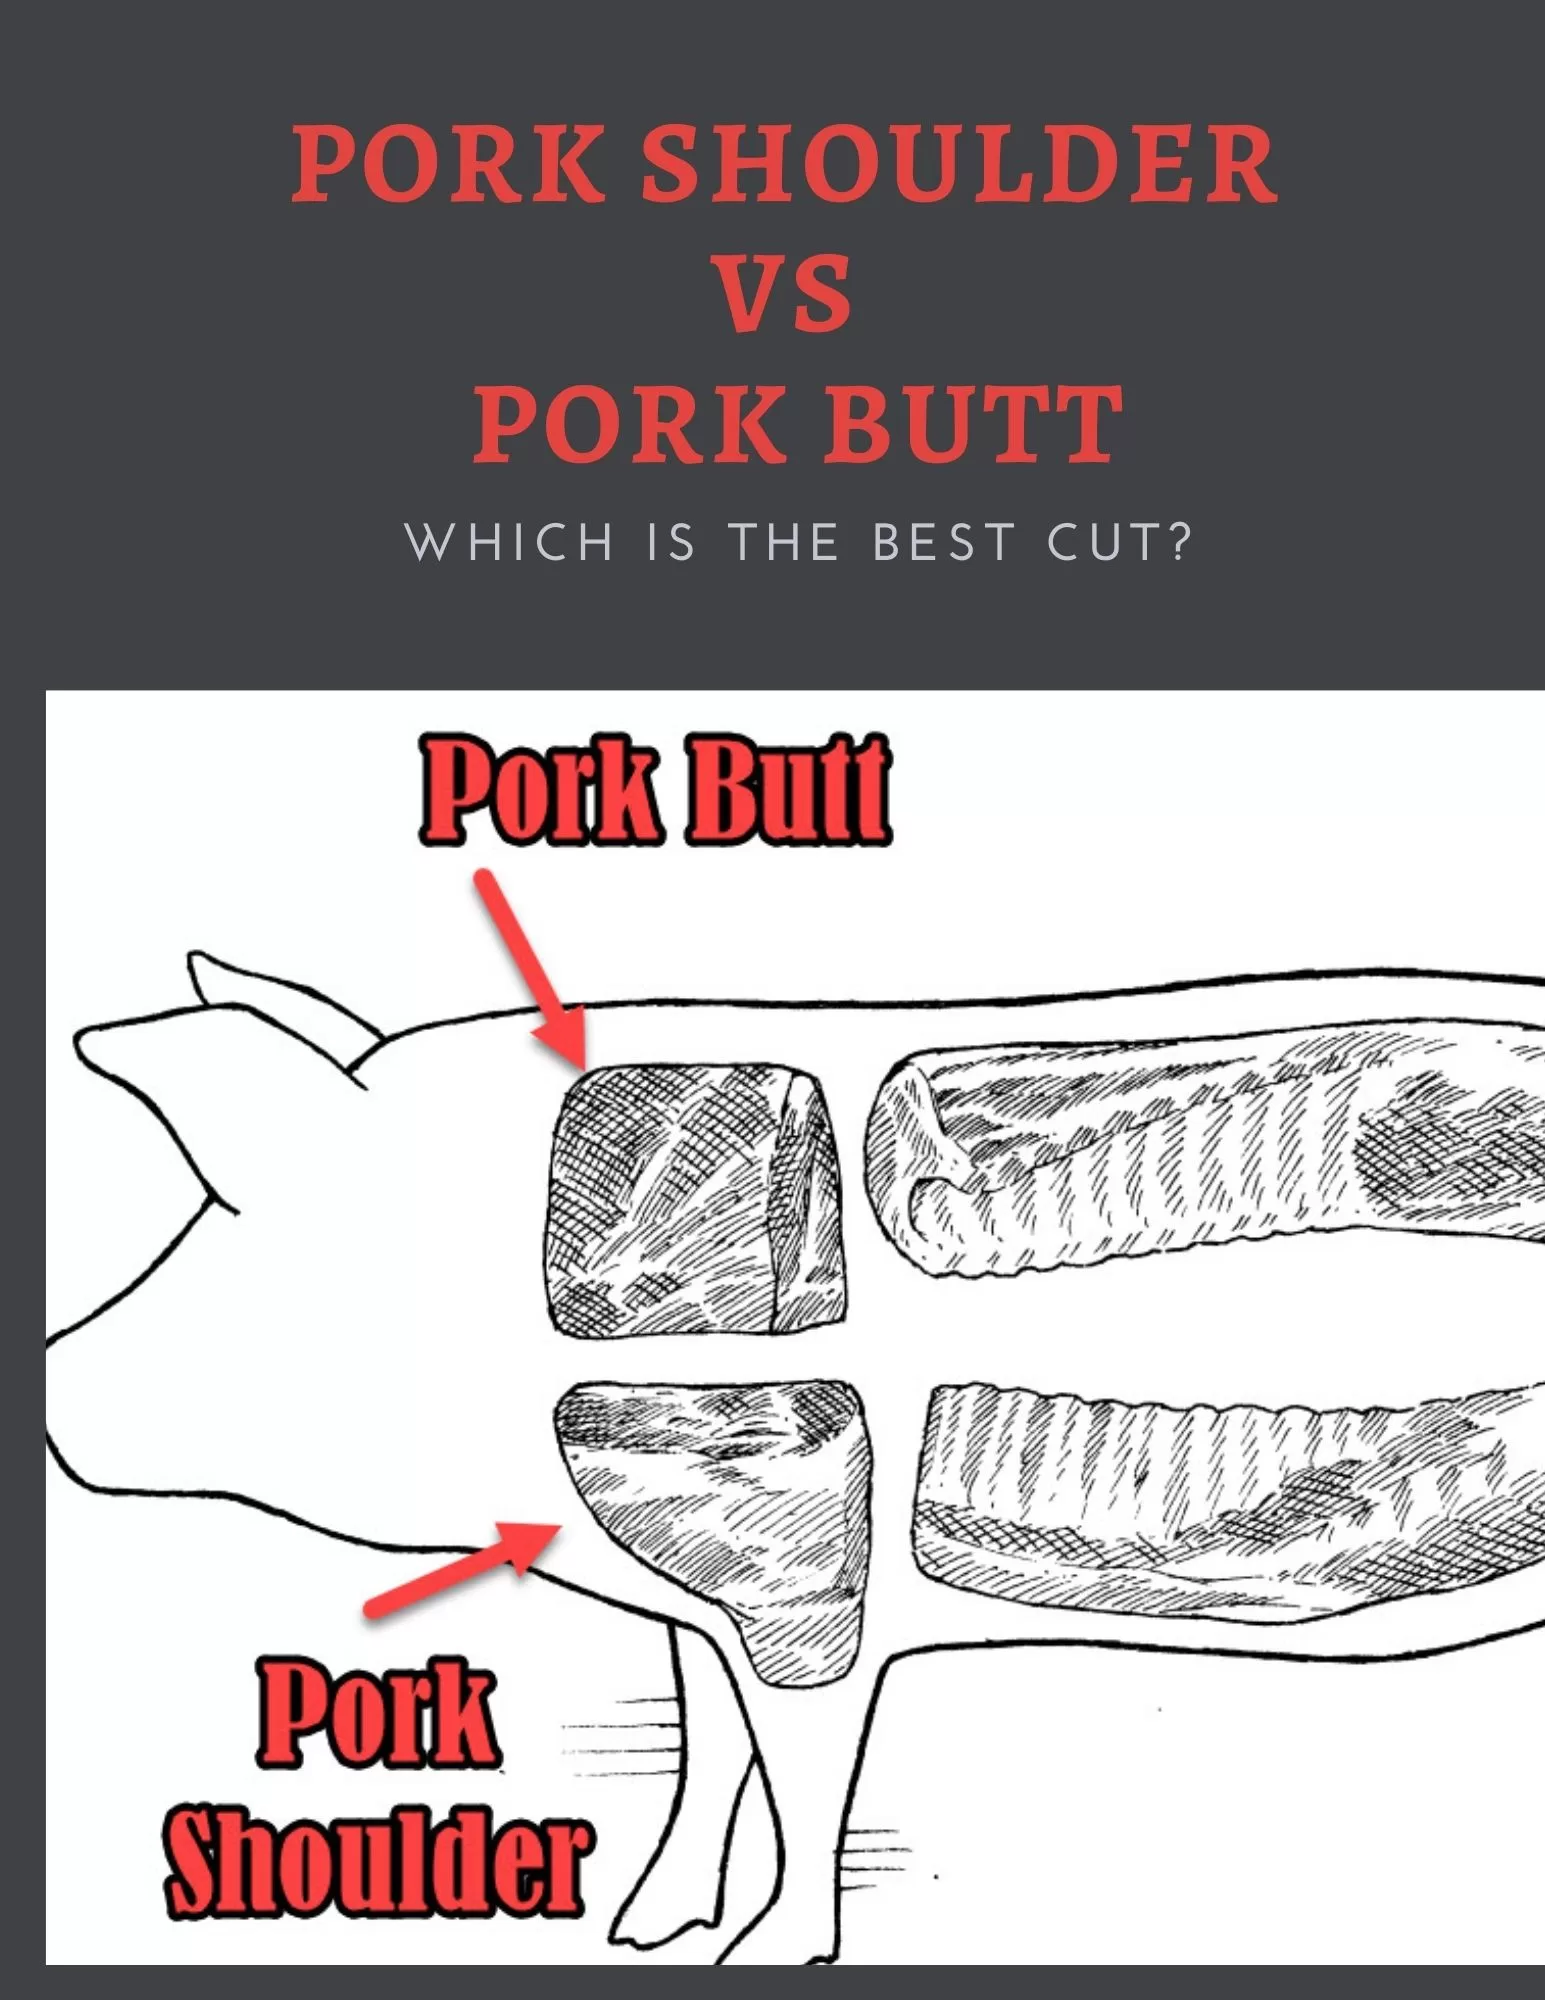 Pork Shoulder vs Pork Butt